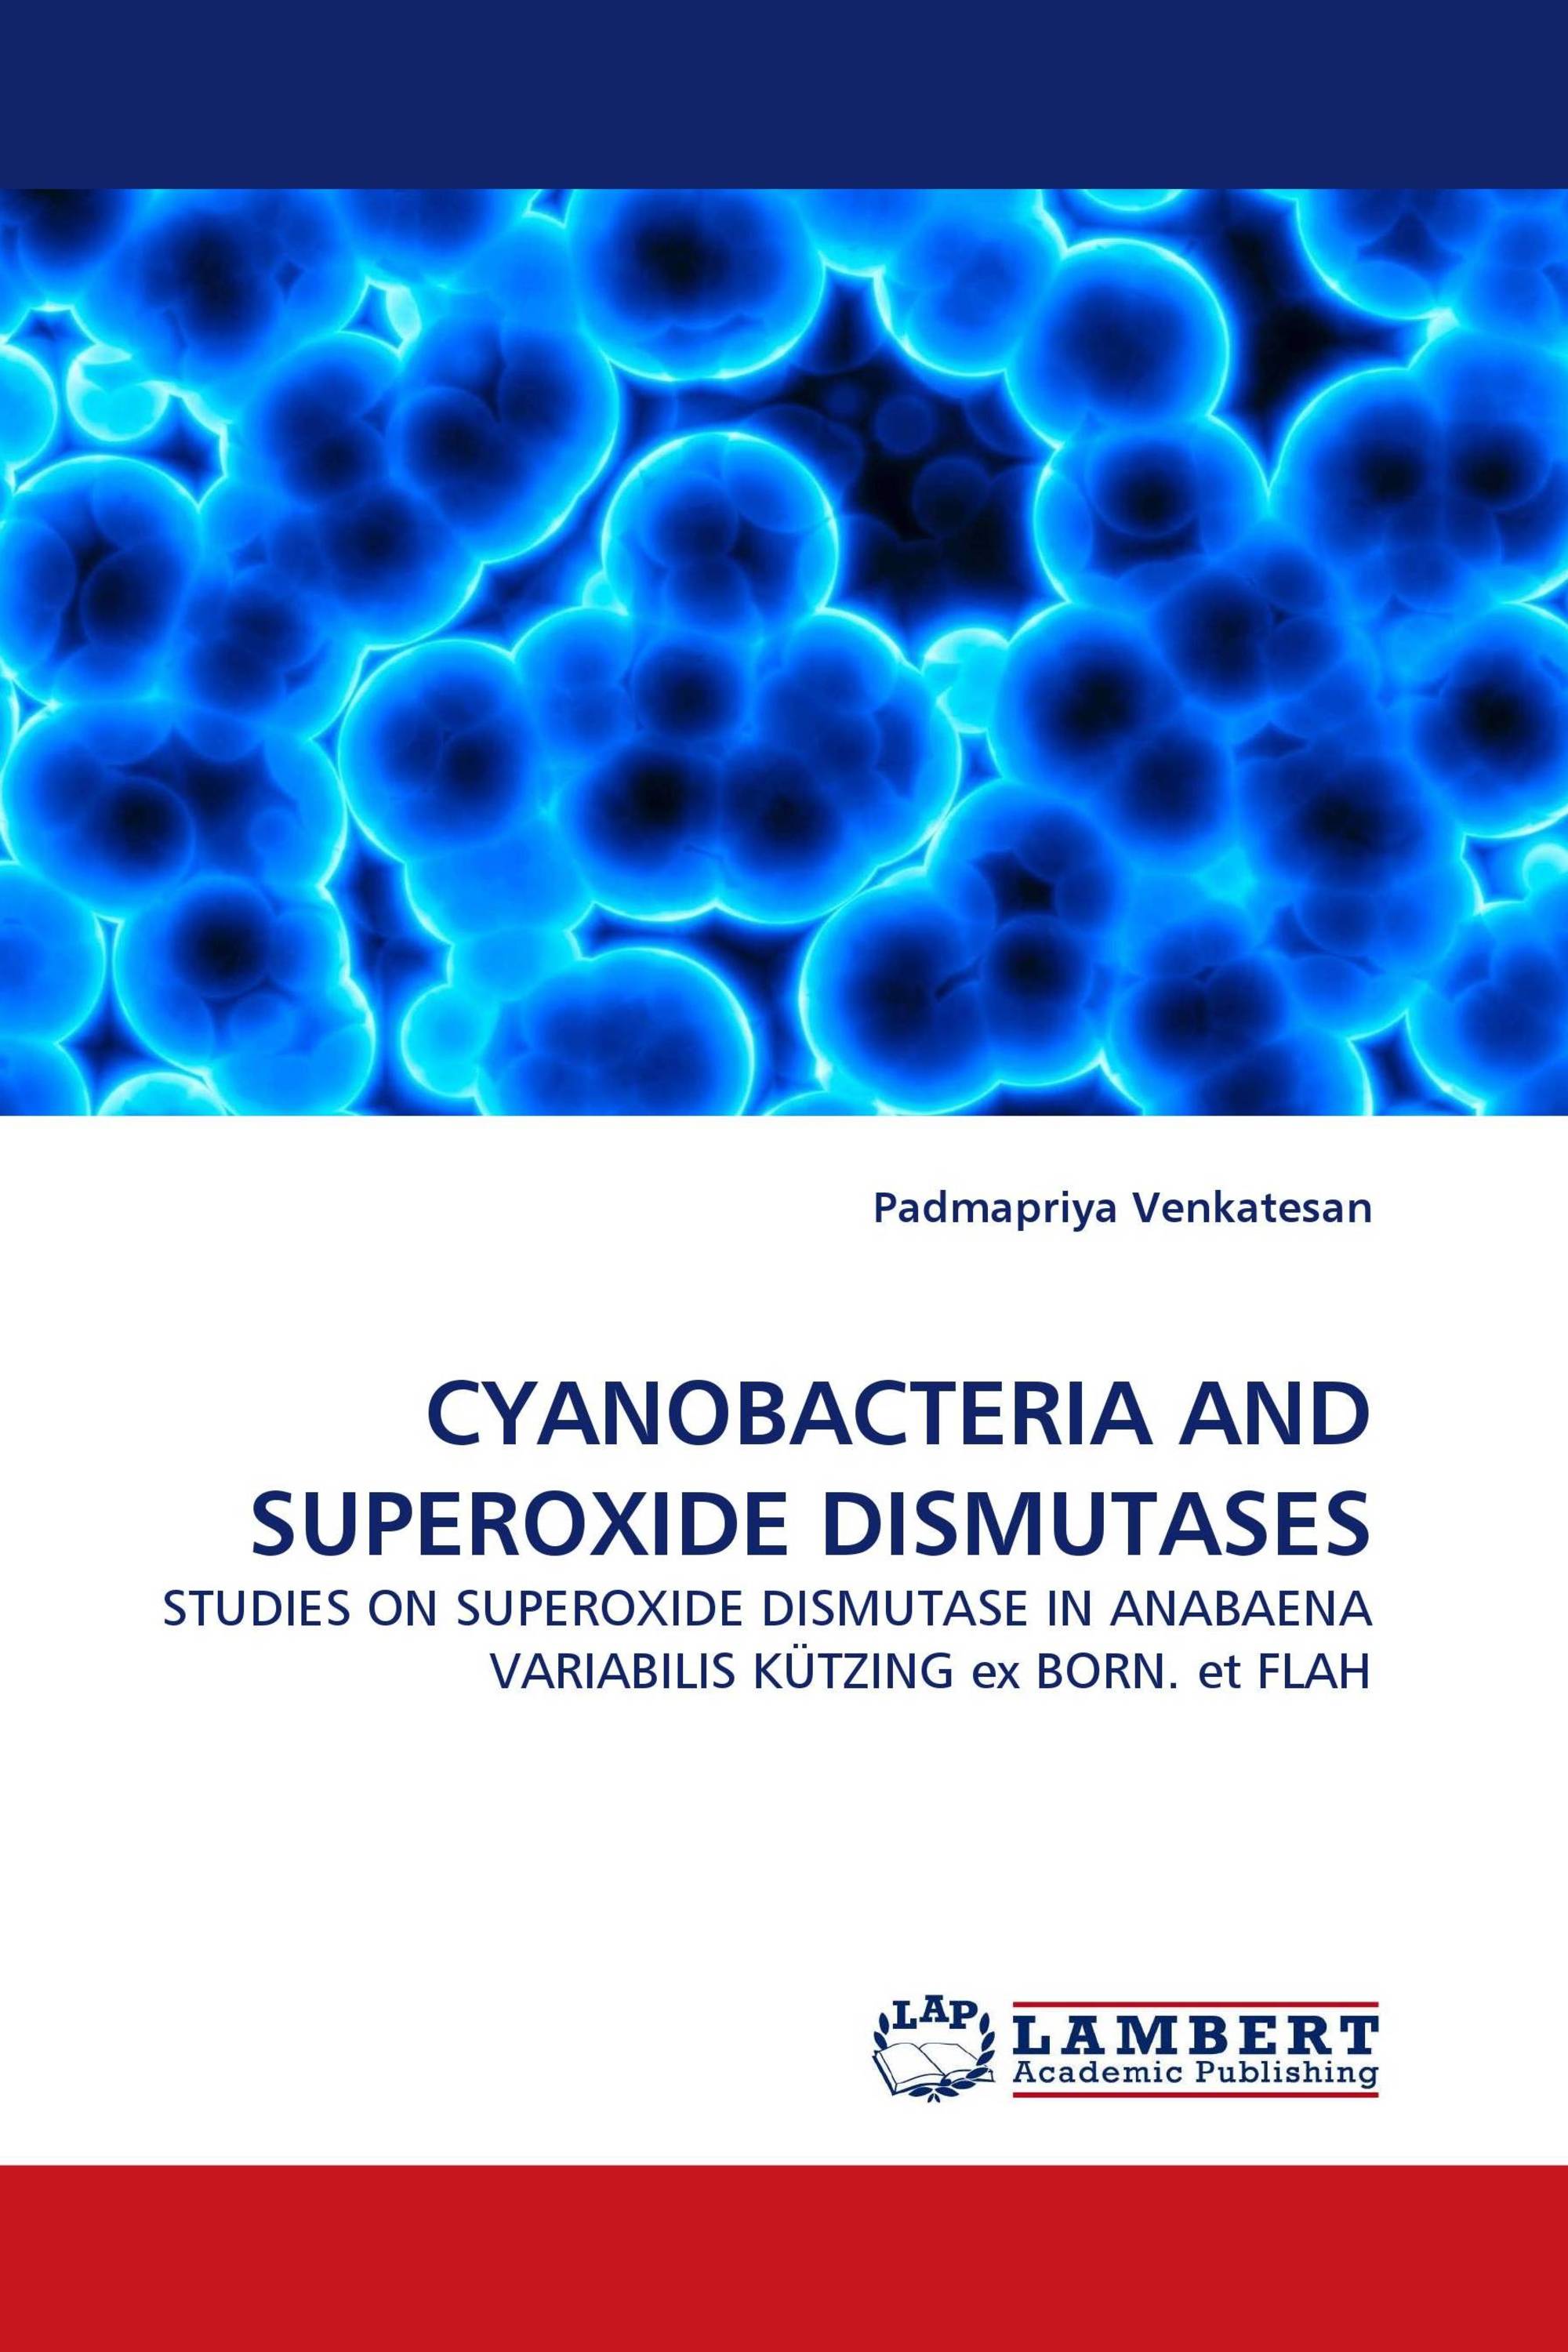 CYANOBACTERIA AND SUPEROXIDE DISMUTASES